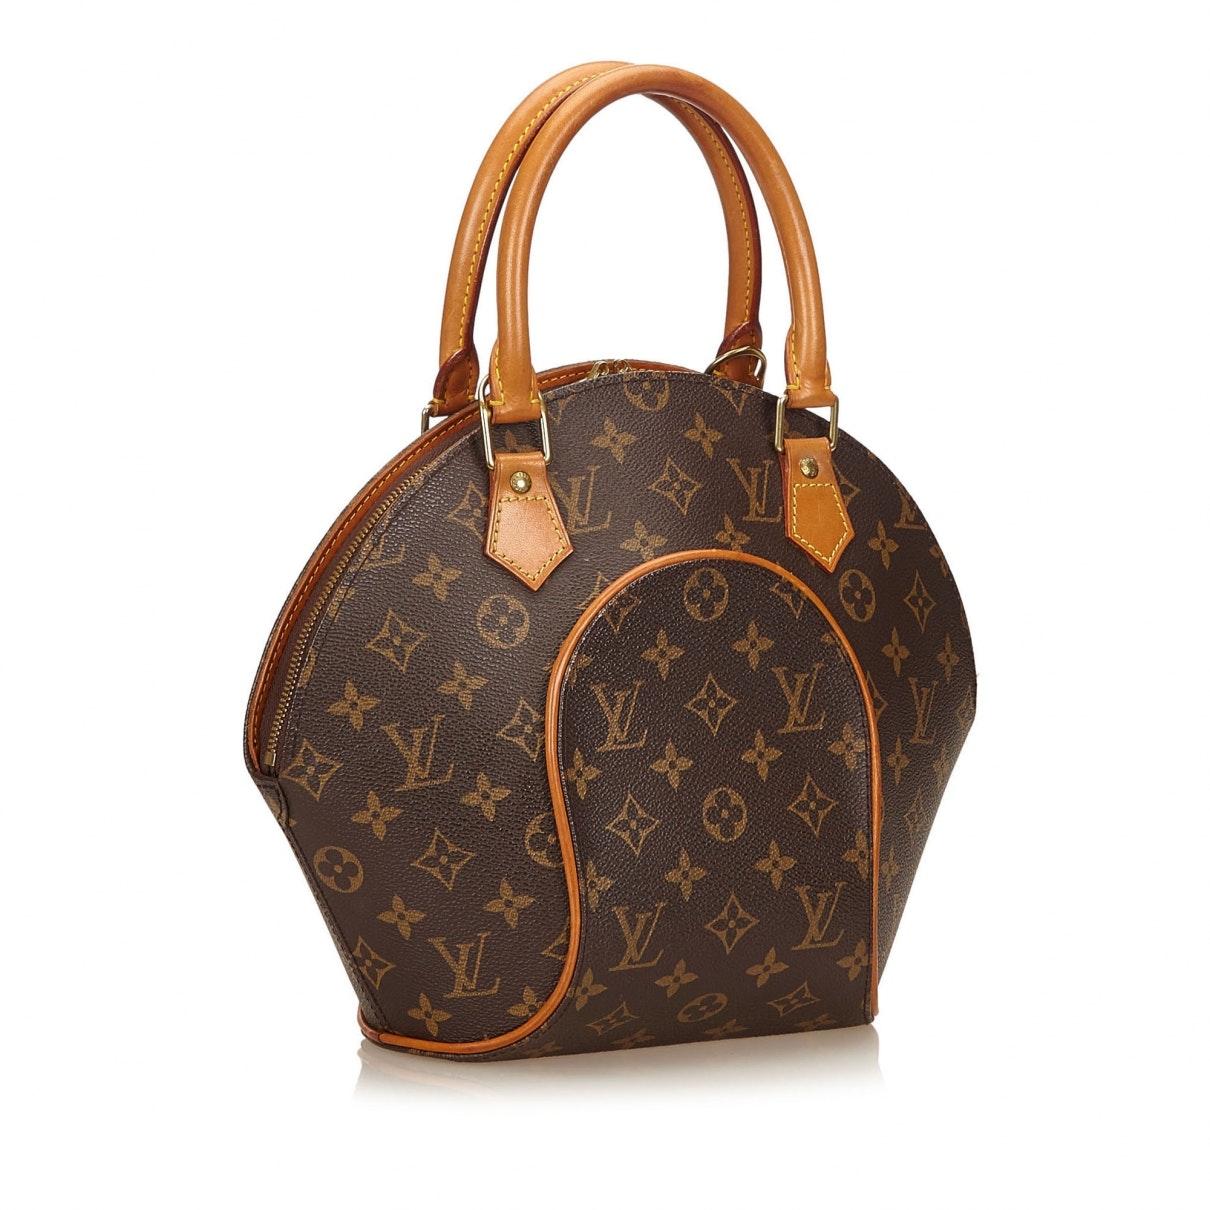 Louis Vuitton Canvas Pre-owned Ellipse Handbag in Brown - Lyst